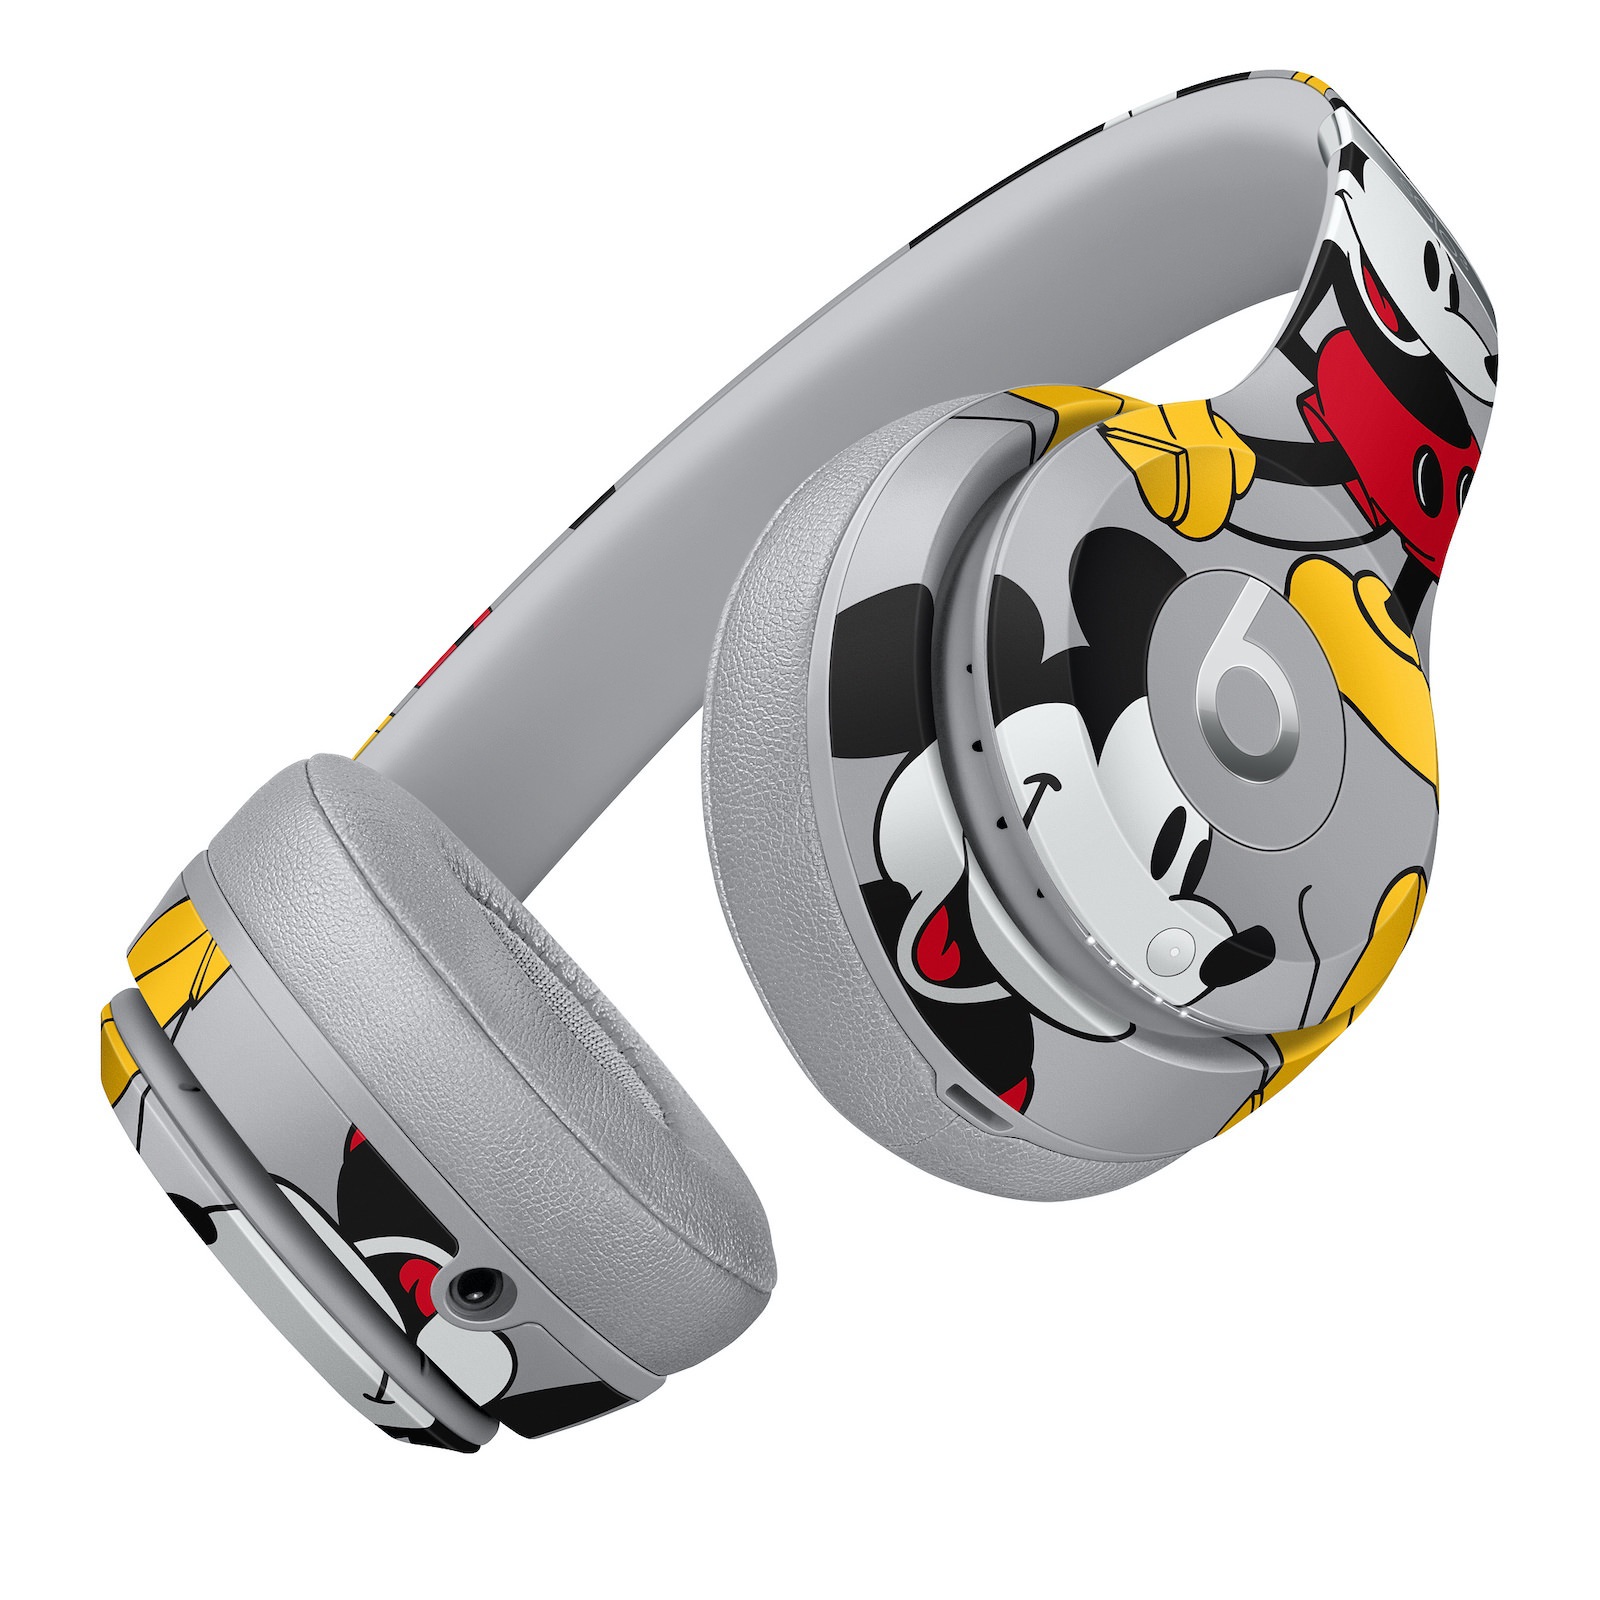 Beats-Solo3-Wireless-Headphones-90-anniversary-model-03.jpeg